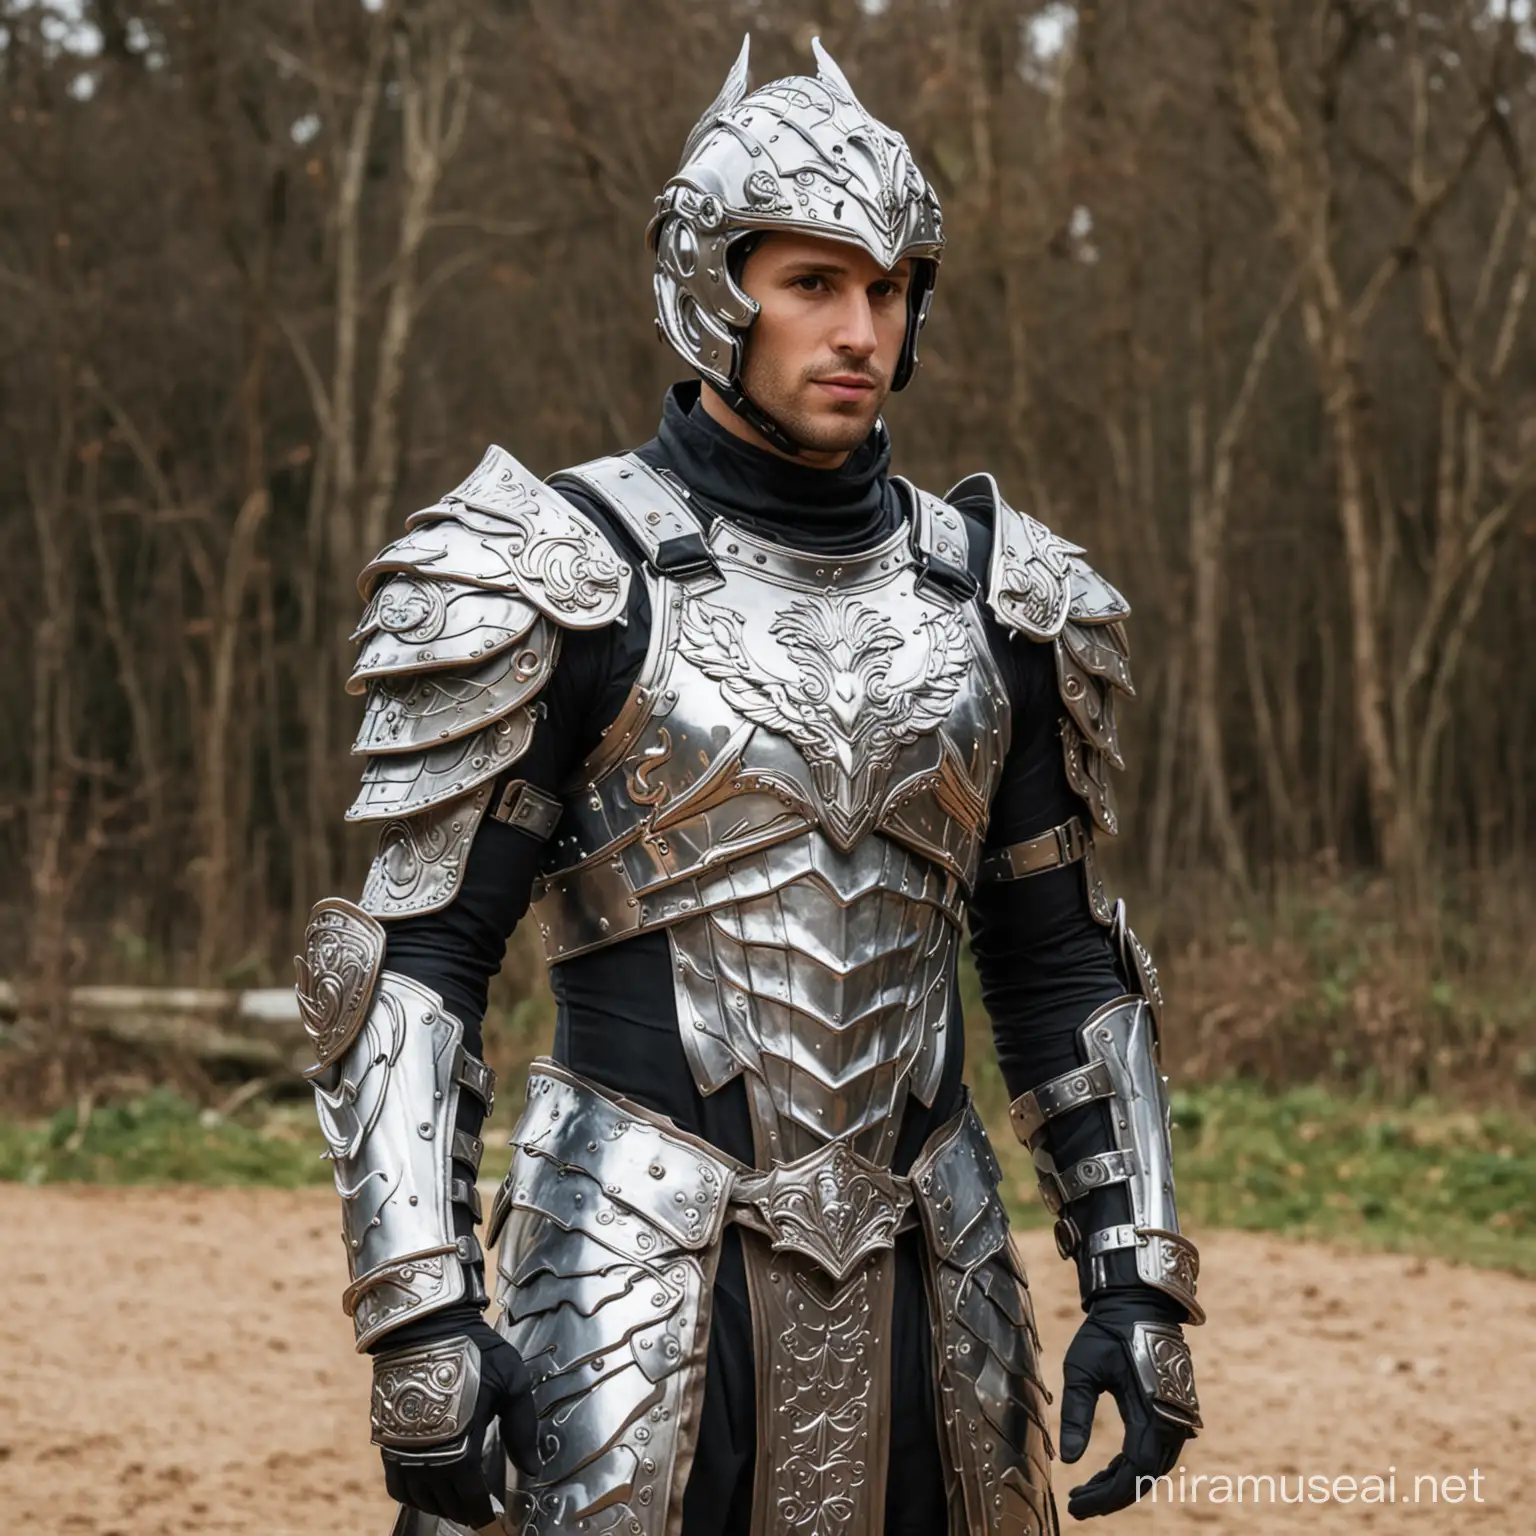 Jonathan Calleri
wearing a pegasus seya armor